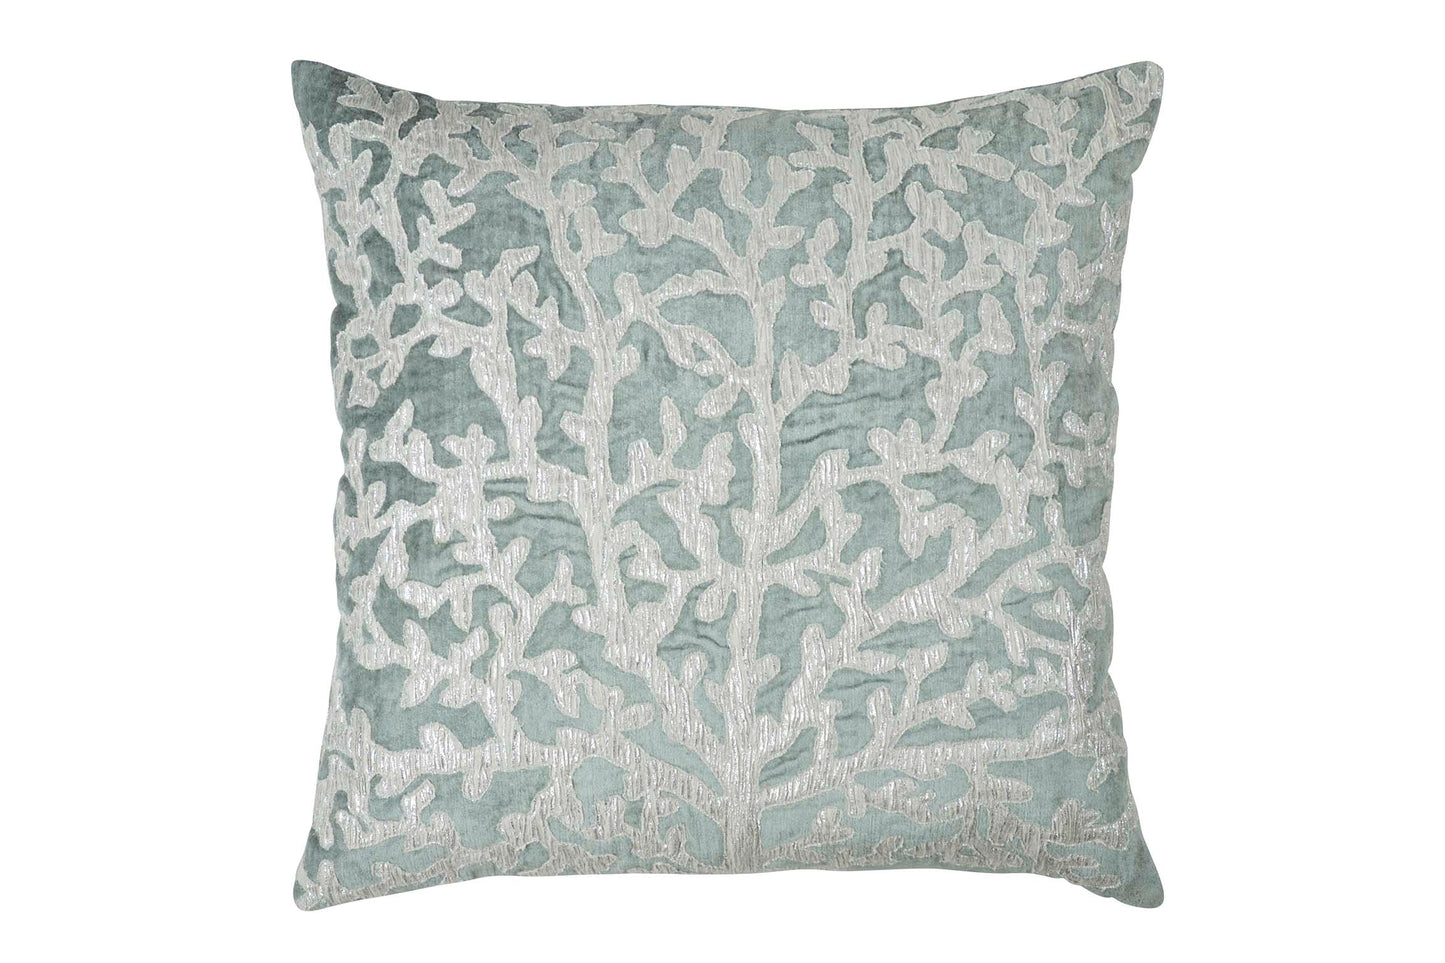 ALL SALES FINAL Michael Aram Tree of Life Applique Decorative Pillow